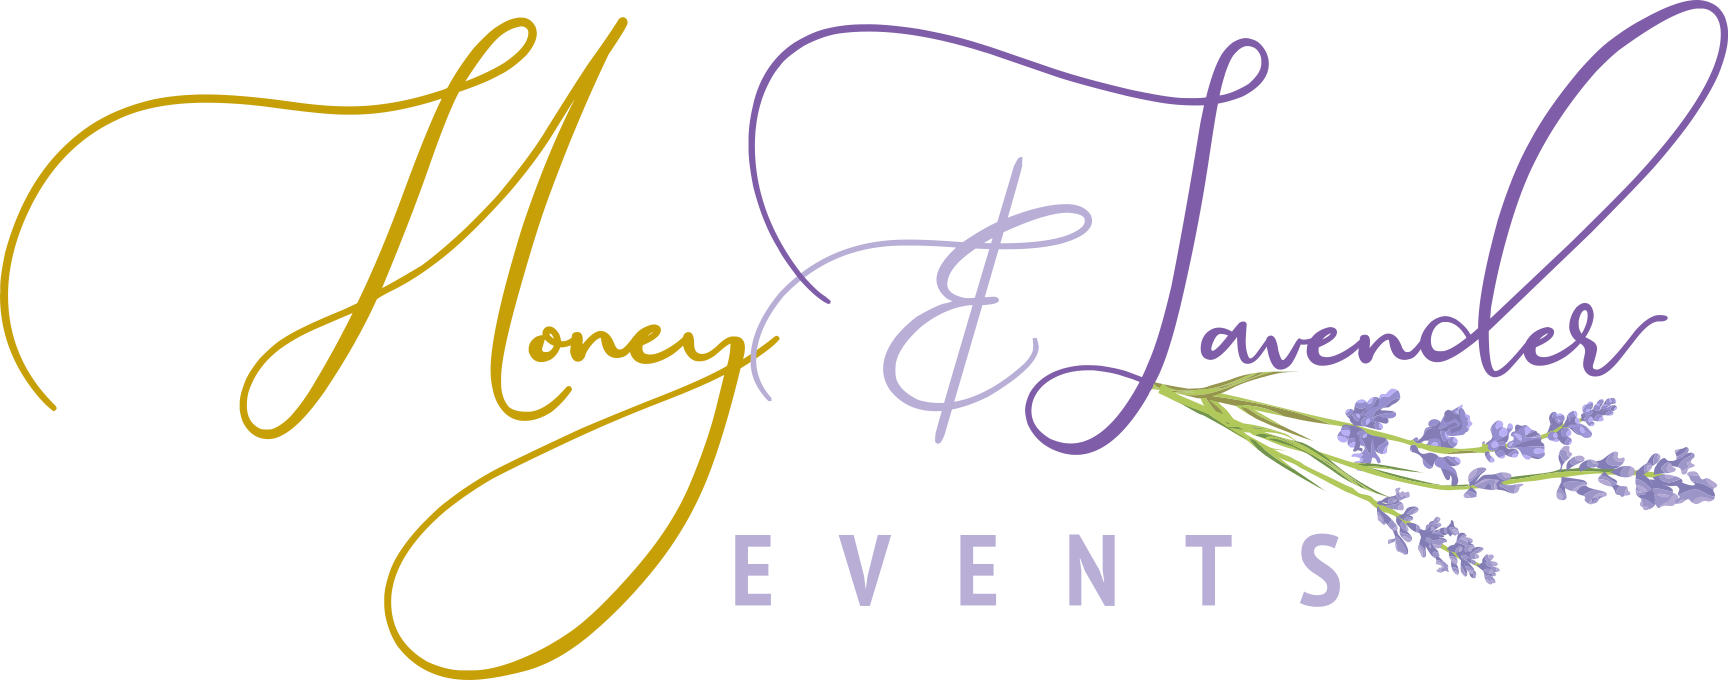 honey and lavender event planners washington dc logo